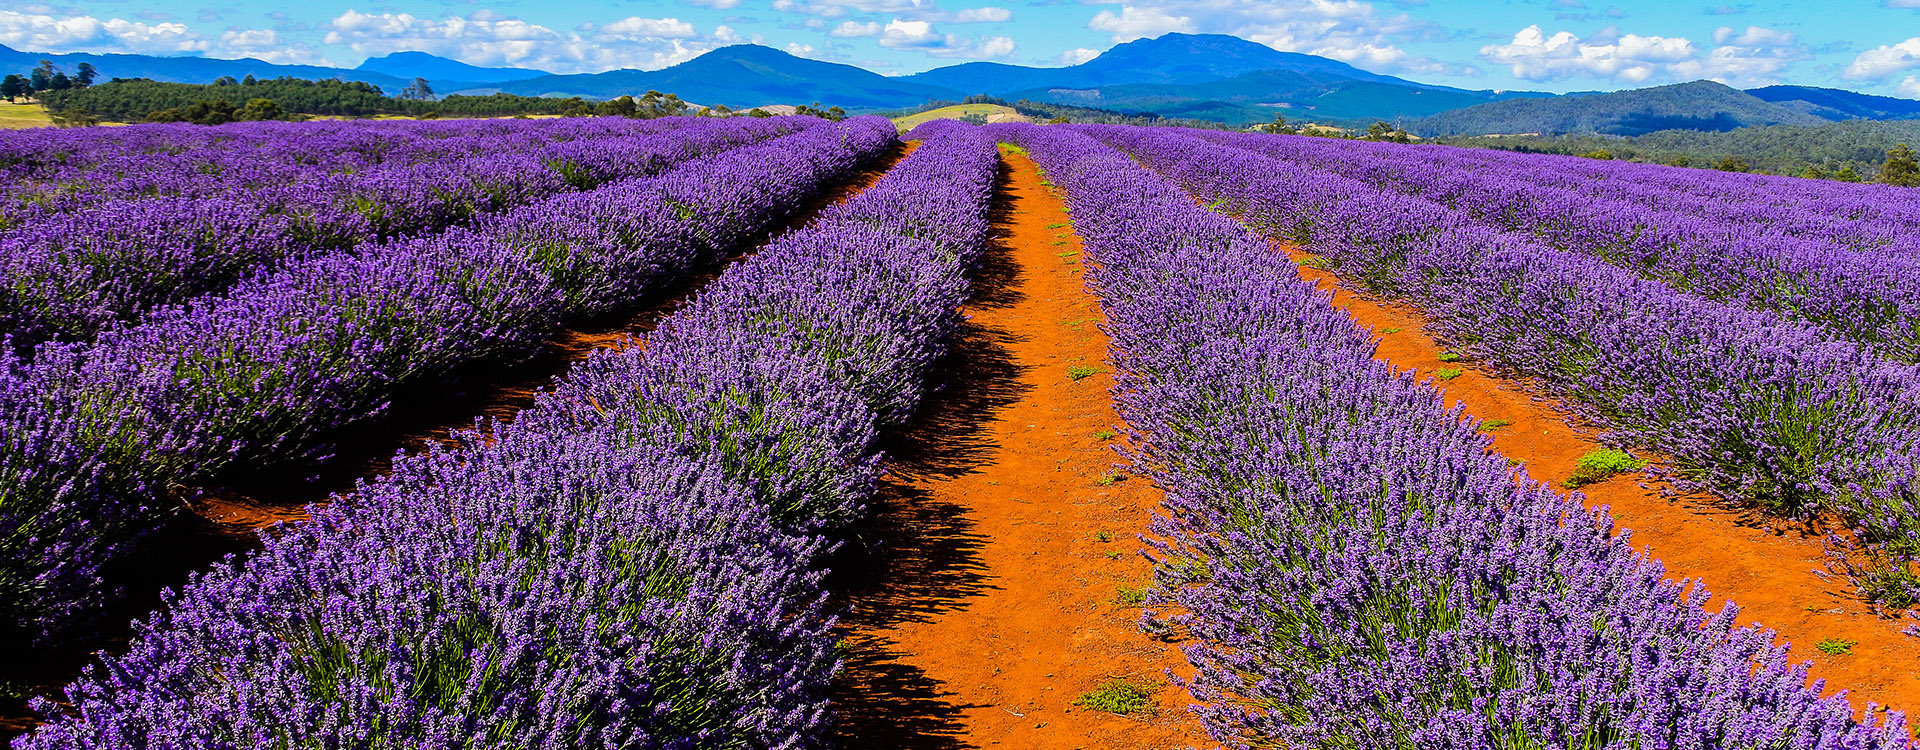 Bride-stowe Lavender Estate, Tasmania, Australia. Beautiful scenery of pure Lavender from Tasmania